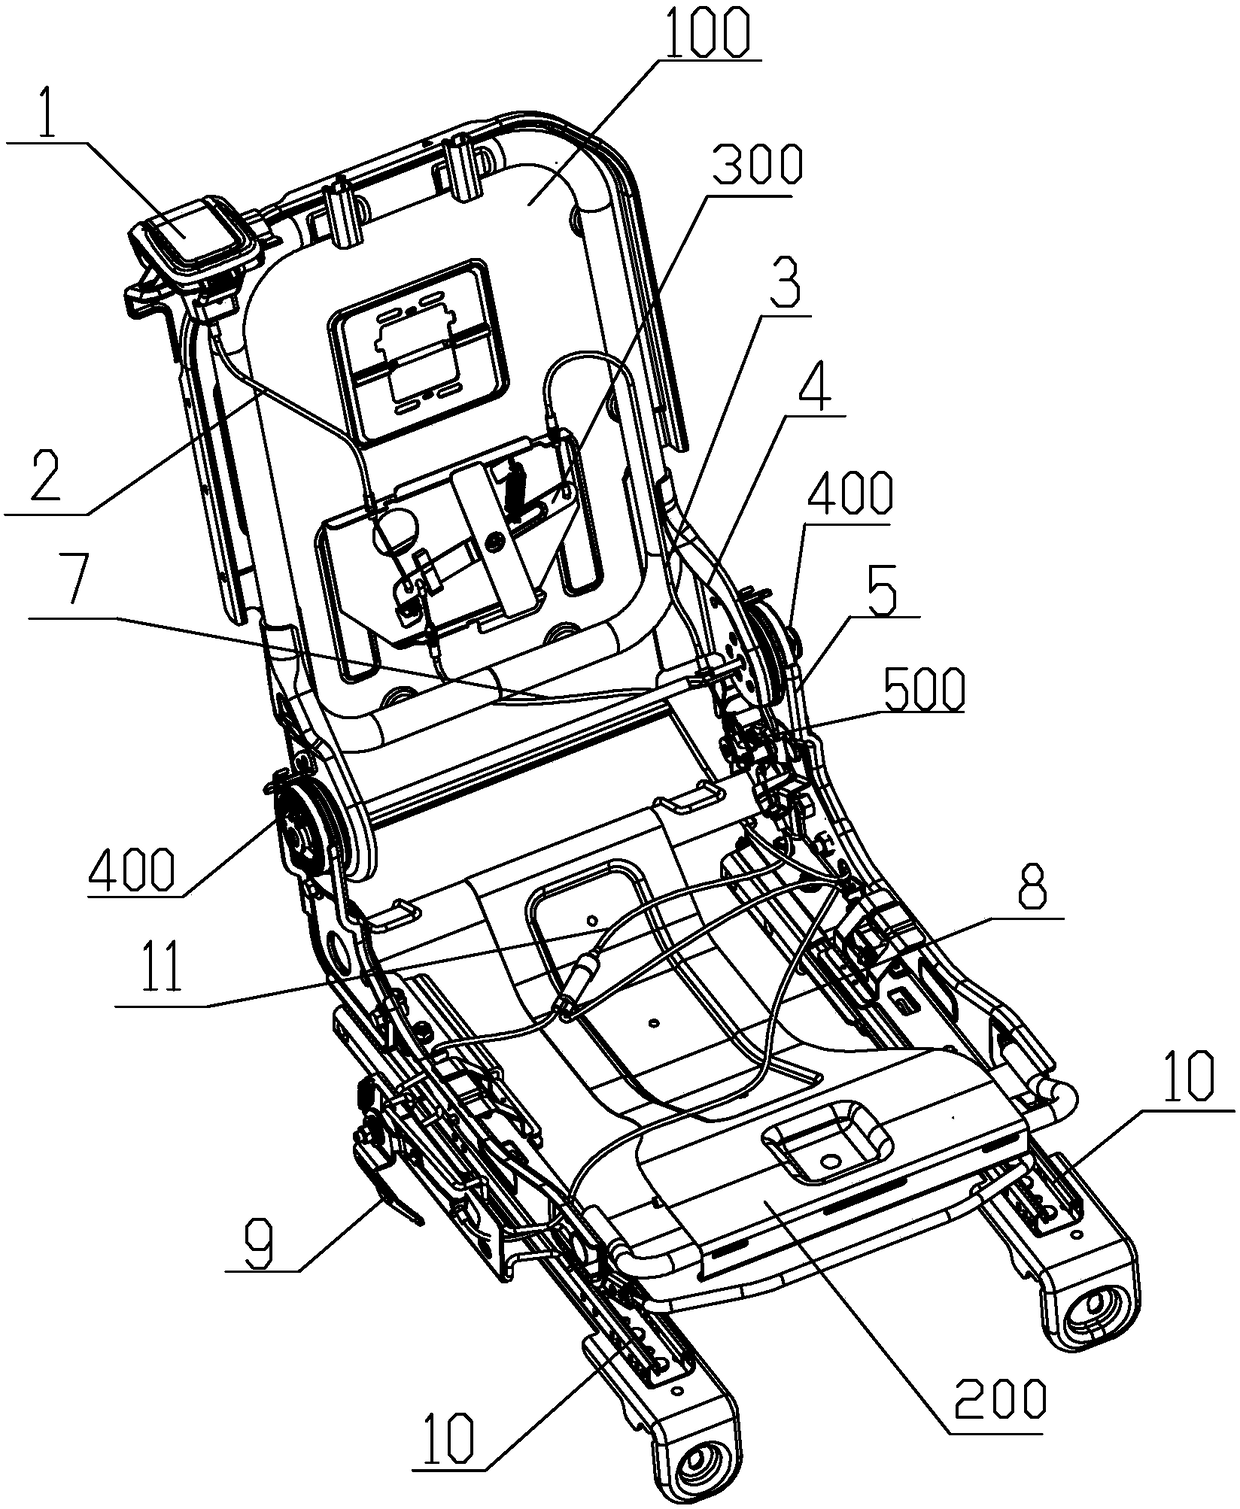 Automobile seat unlocking device